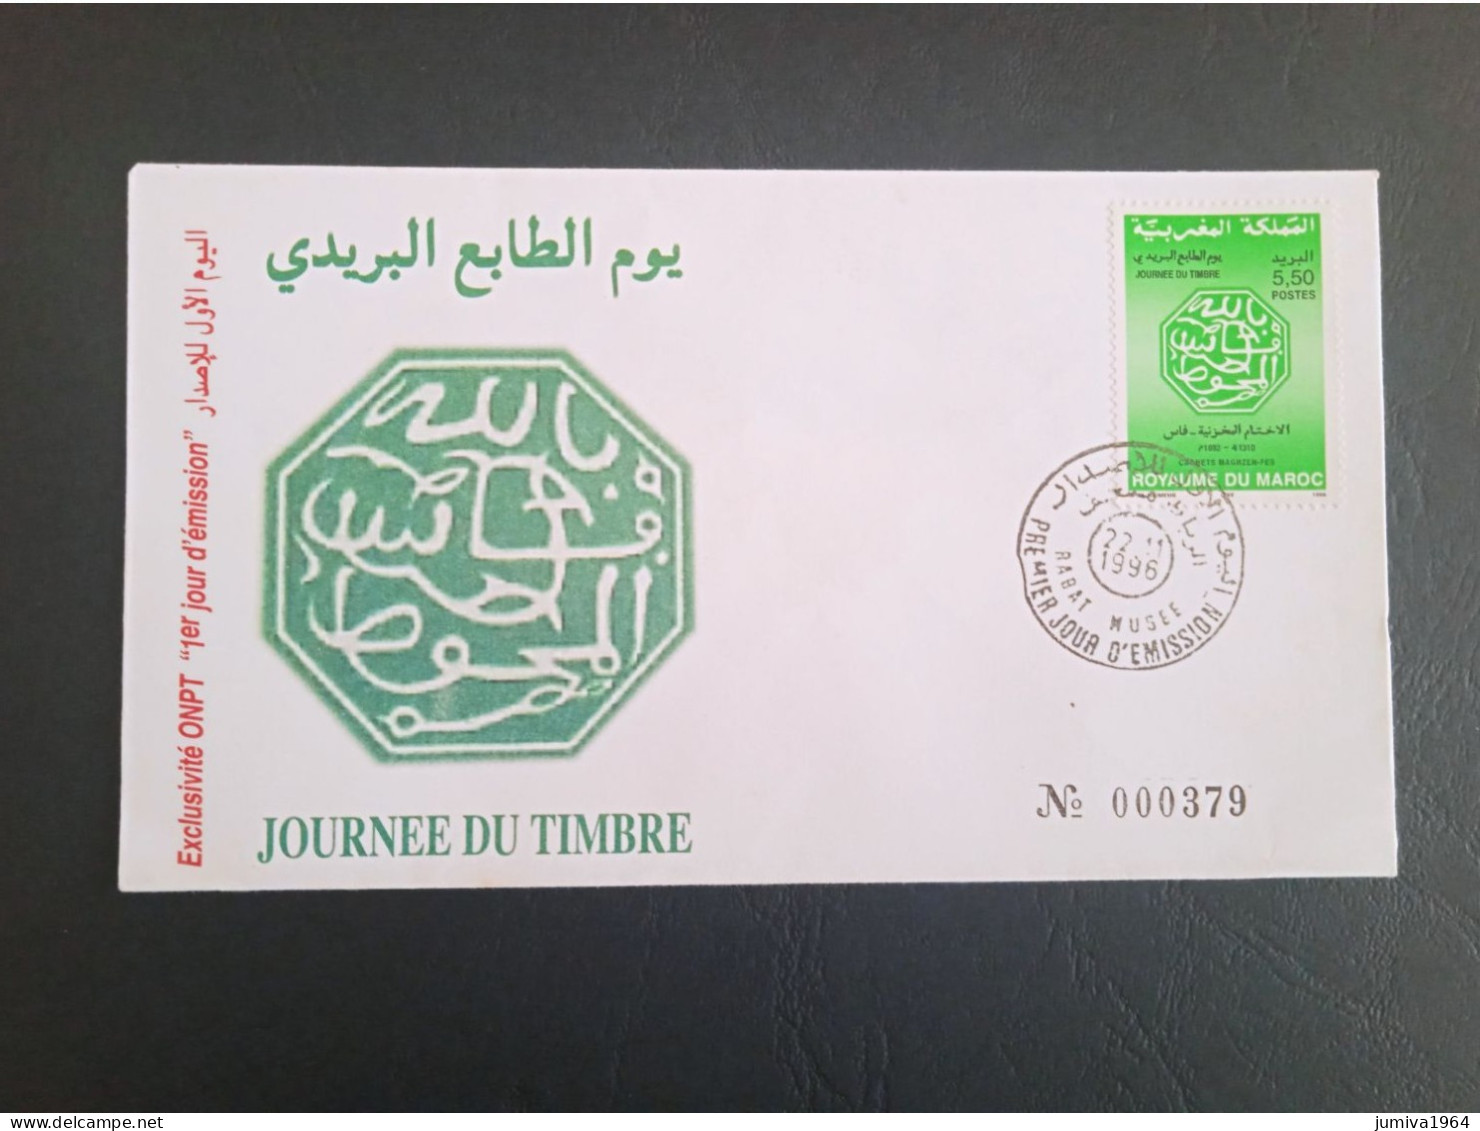 Maroc - Morocco - Marruecos - 1996 - FDC Journée Du Timbre - TTB - Morocco (1956-...)